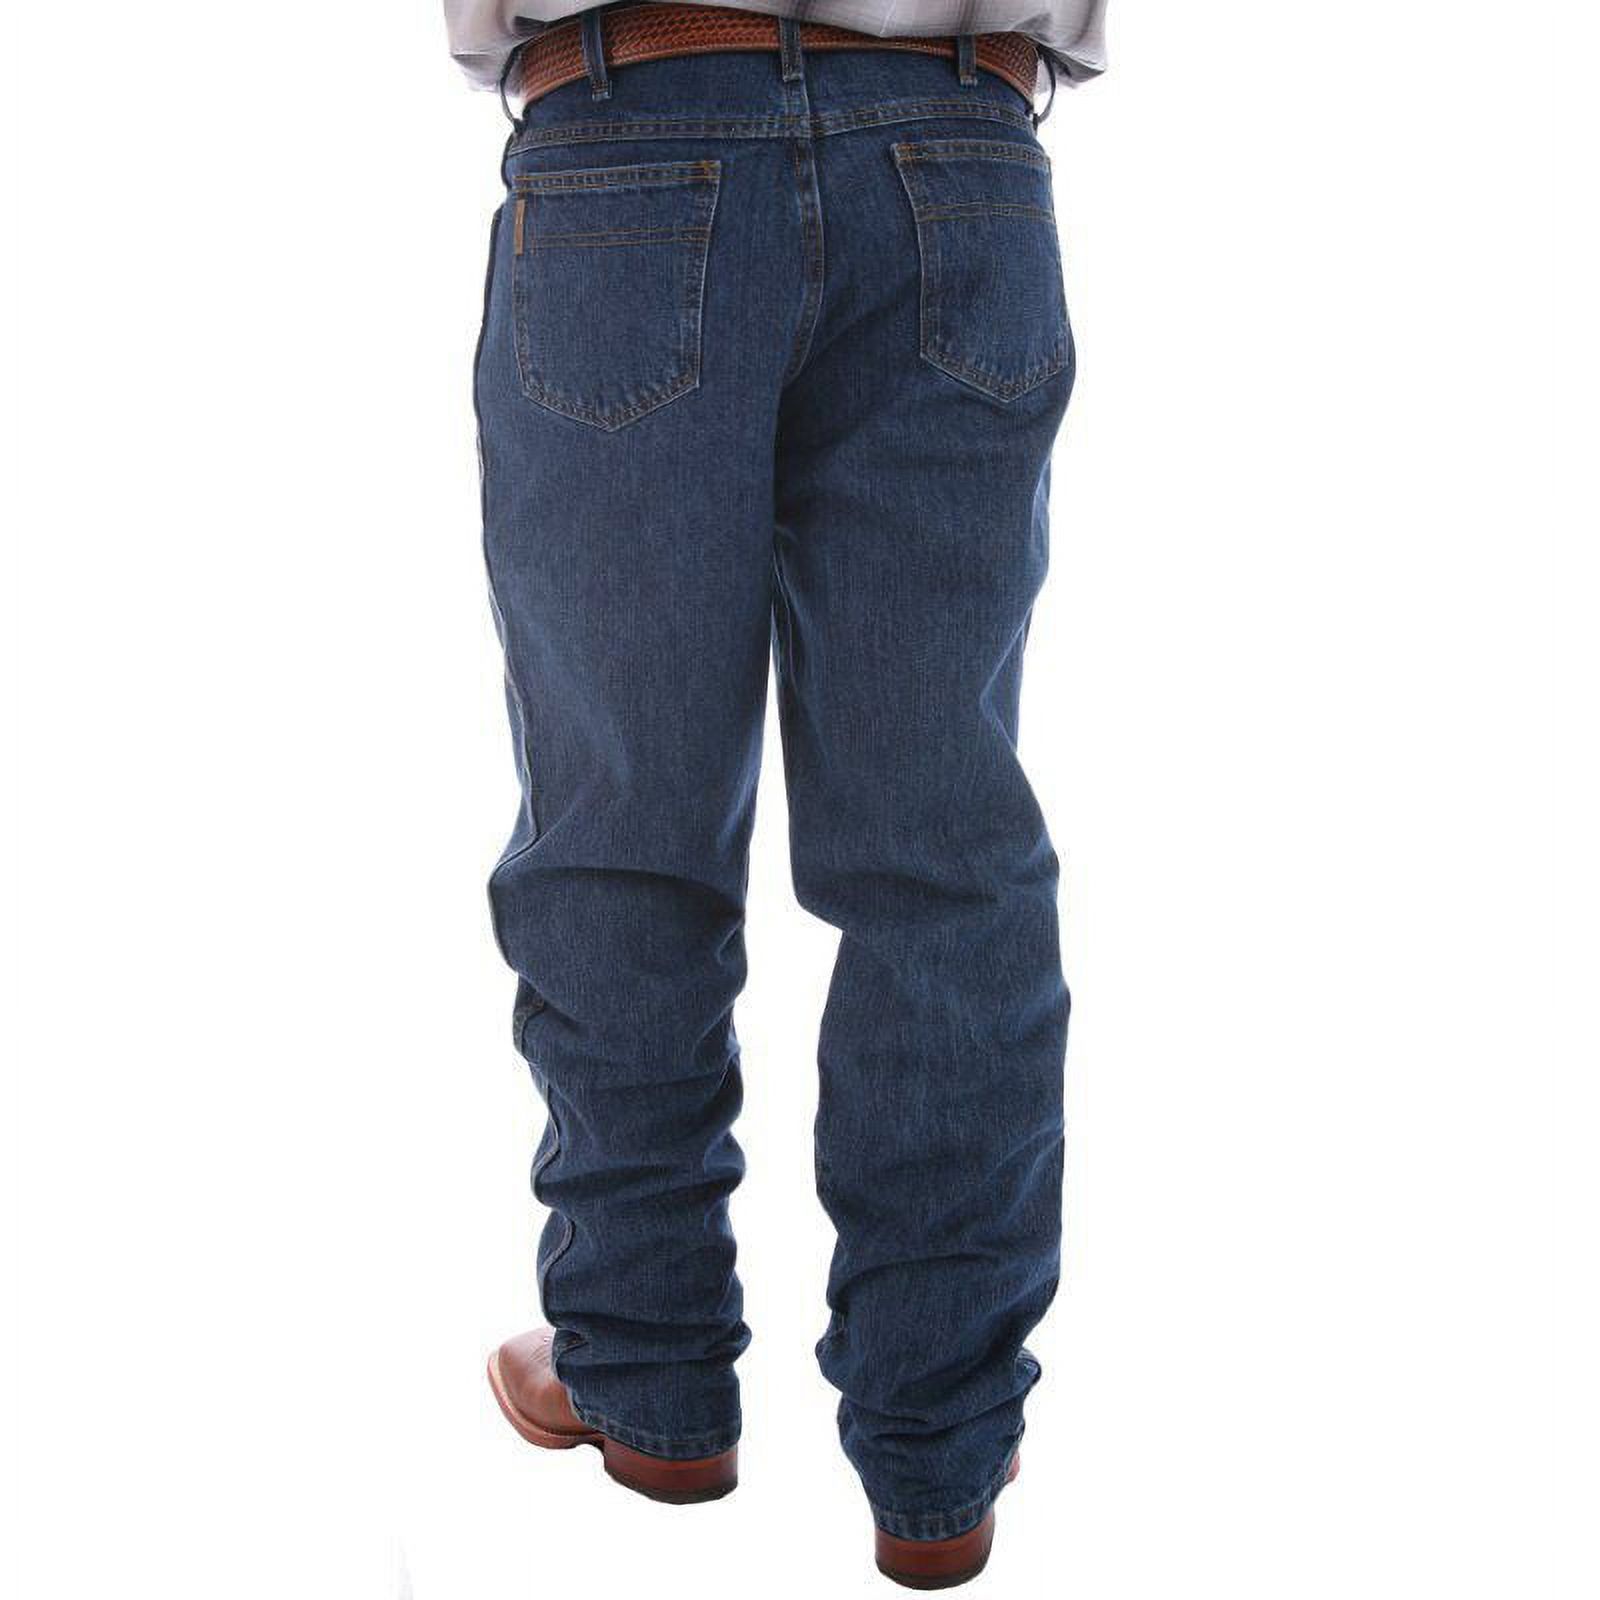 Cinch Apparel Mens Green Label Original Fit Jeans 40x30 Dark Stonewash - image 1 of 4